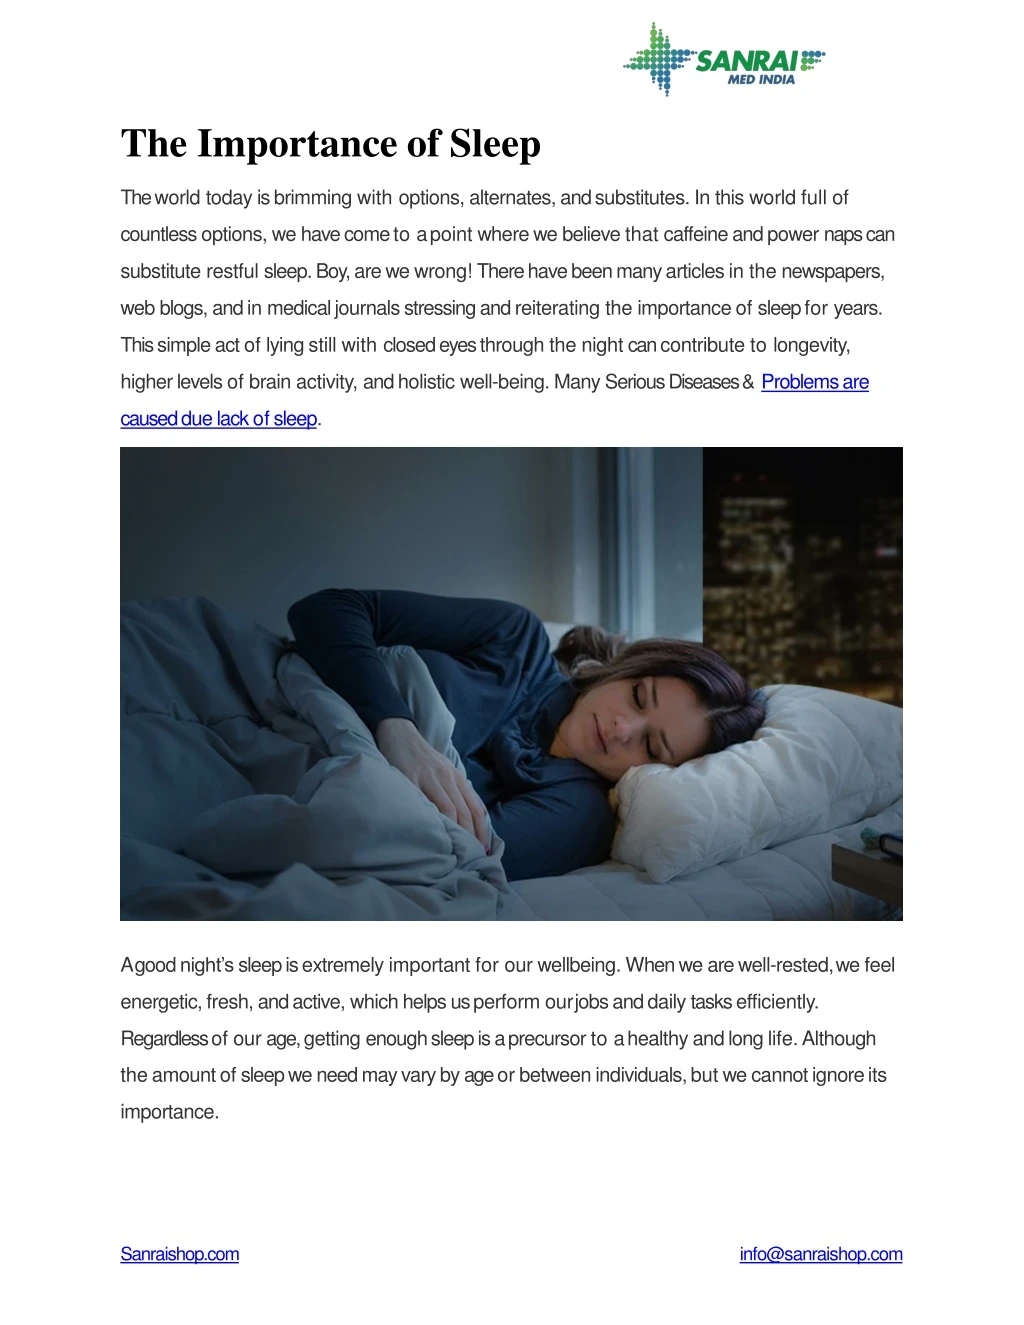 the importance of sleep